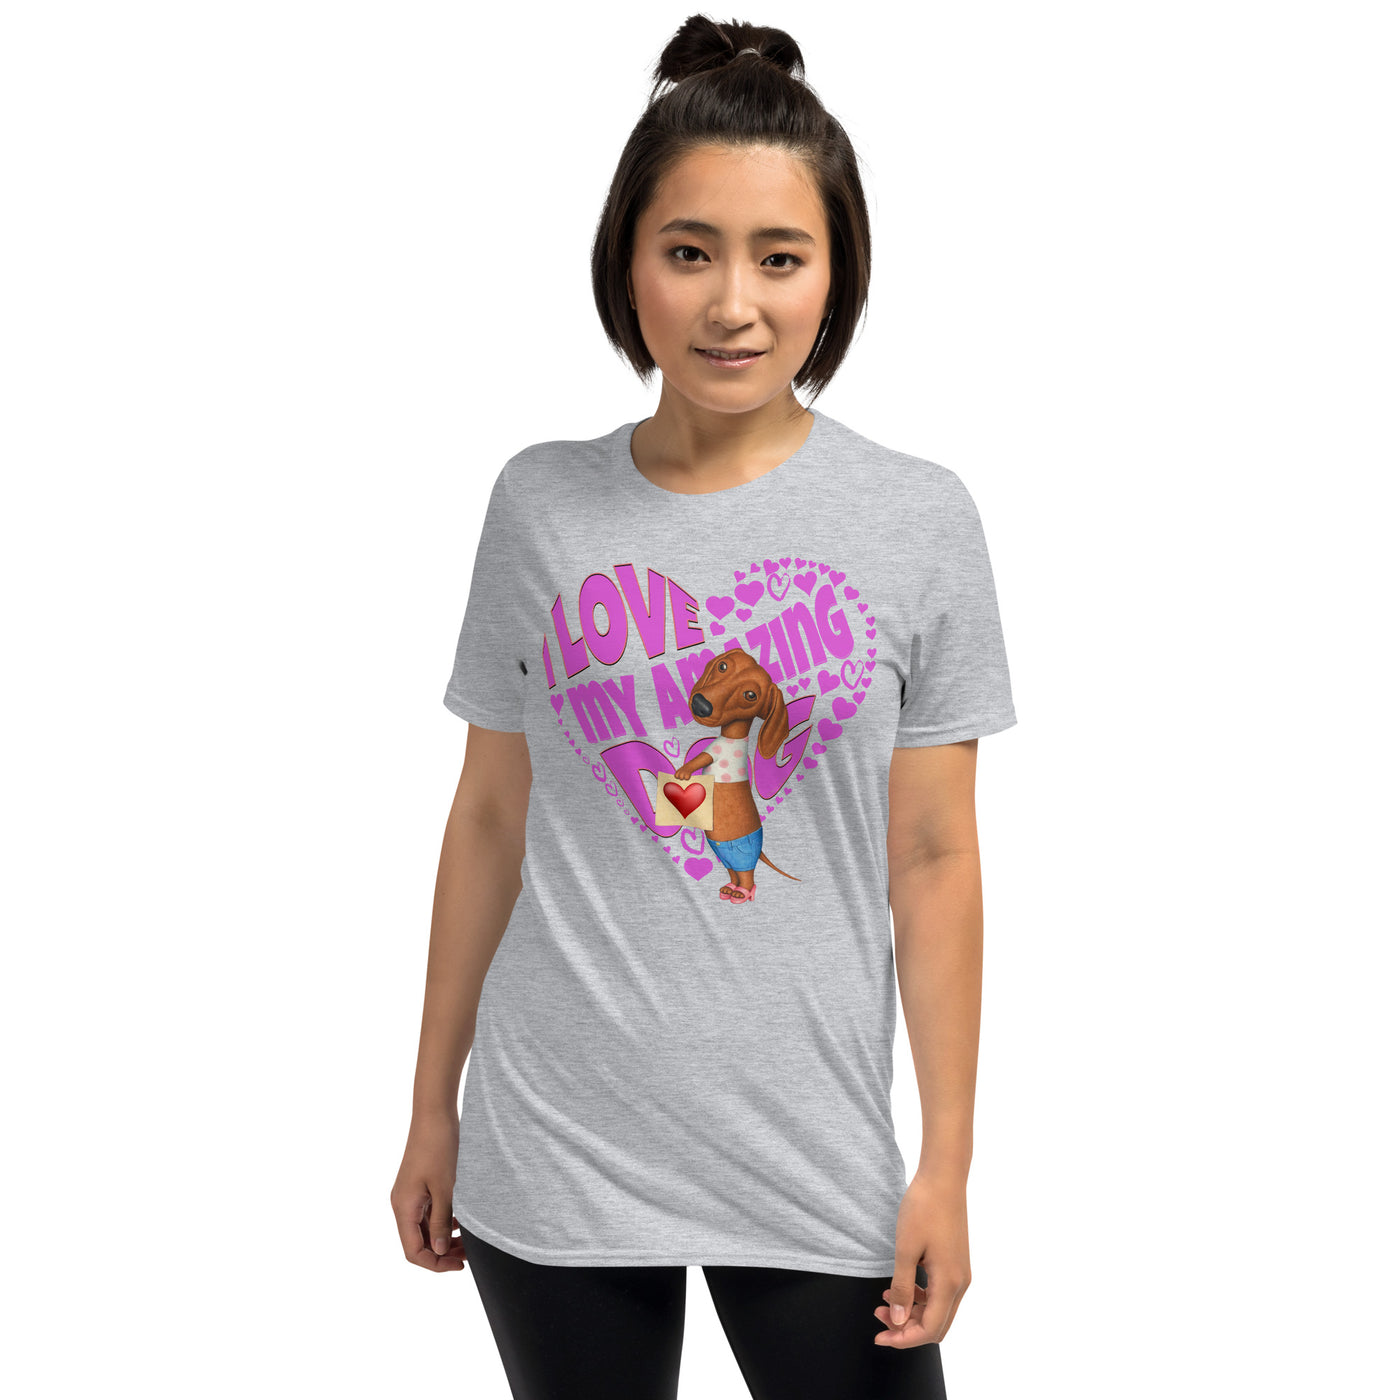 I heart Dachshund Dog on a Doxie Love Unisex T-Shirt tee